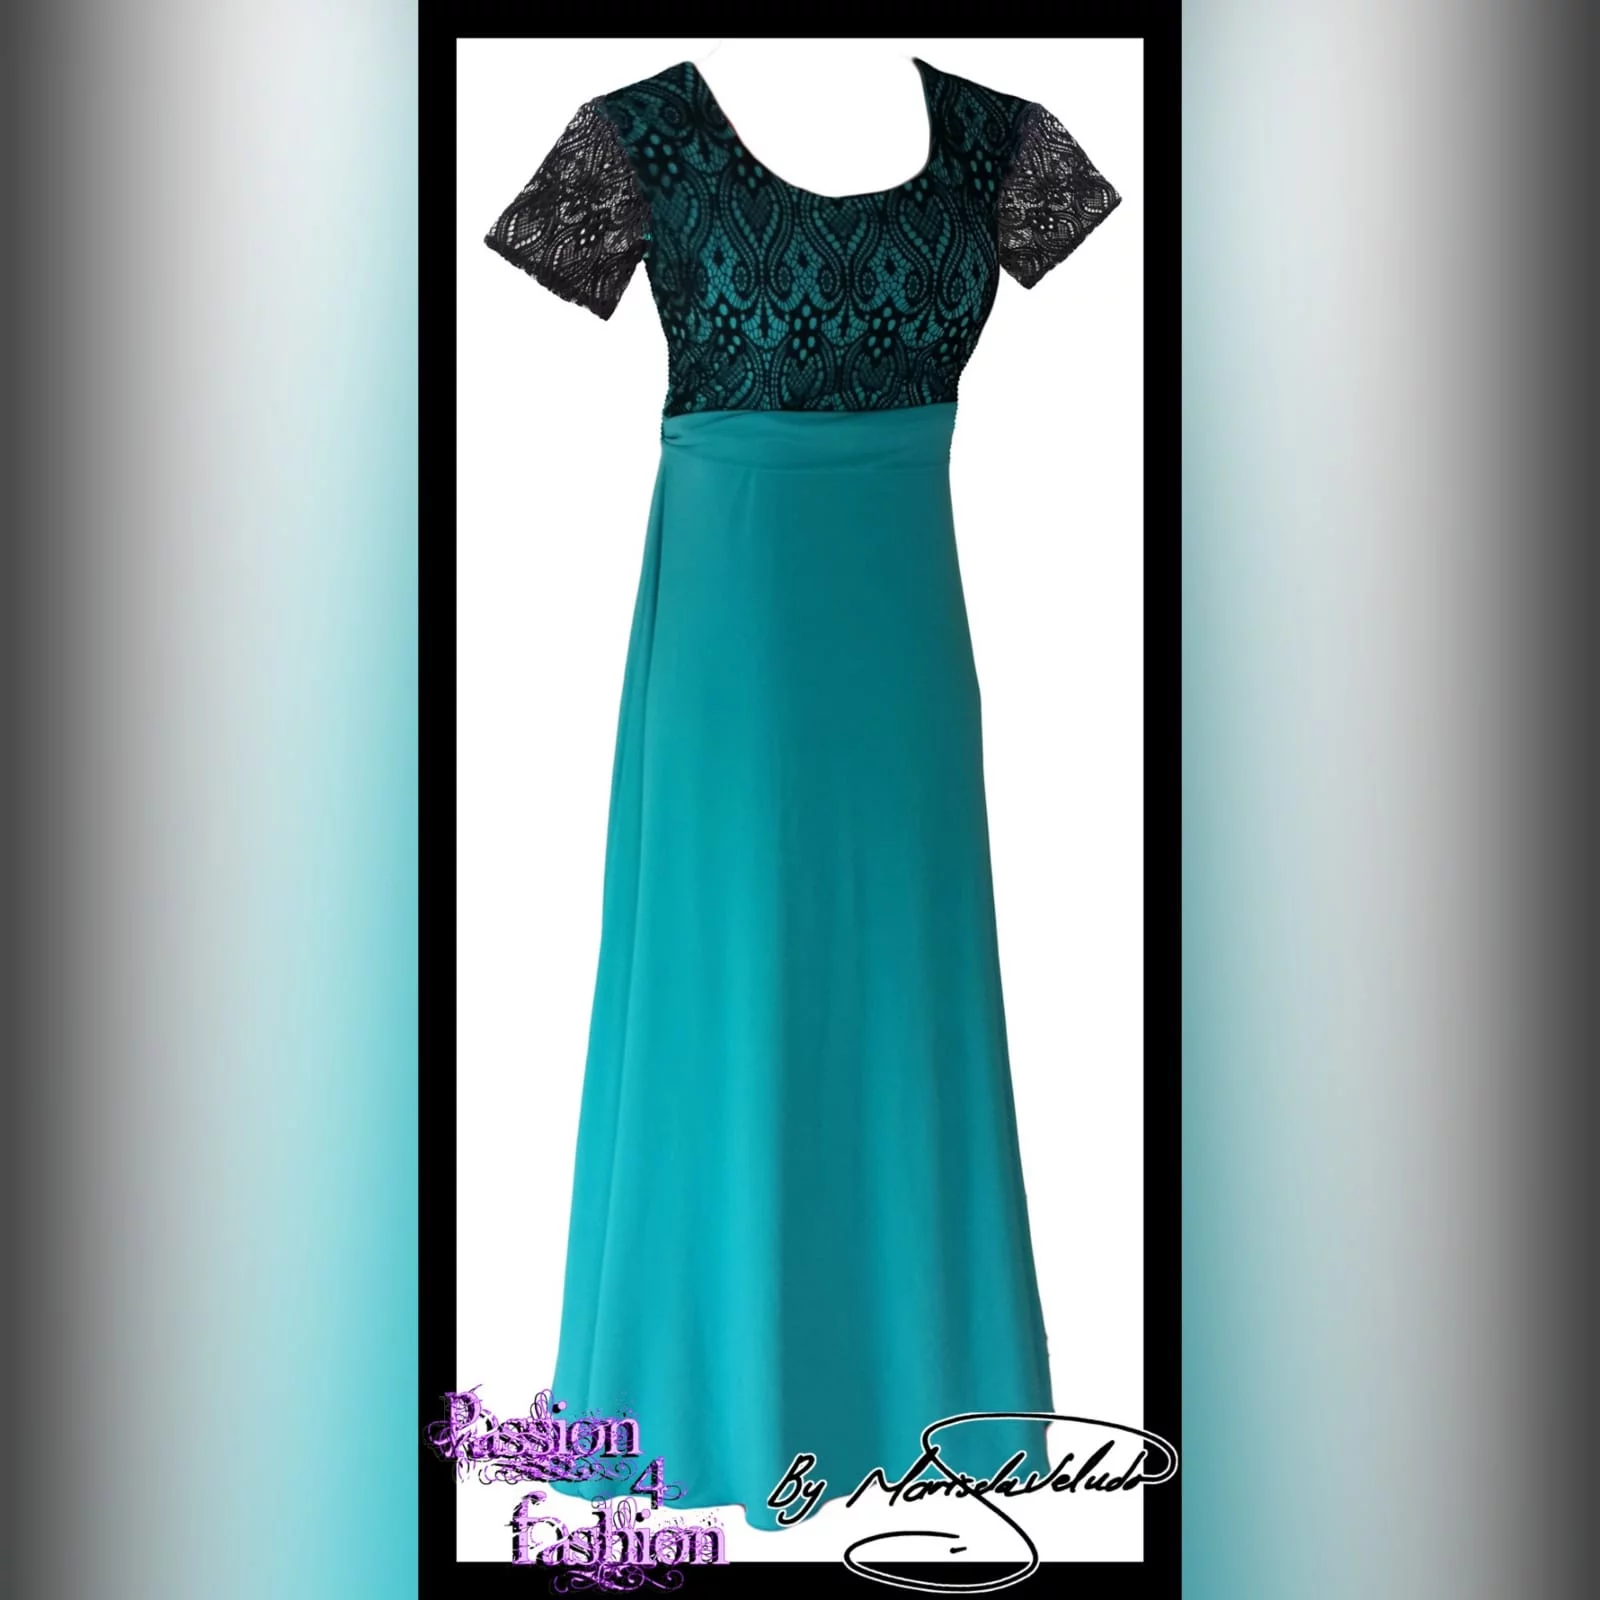 Turquoise & black lace evening dress 1 turquoise & black lace evening dress with short sheer lace sleeves